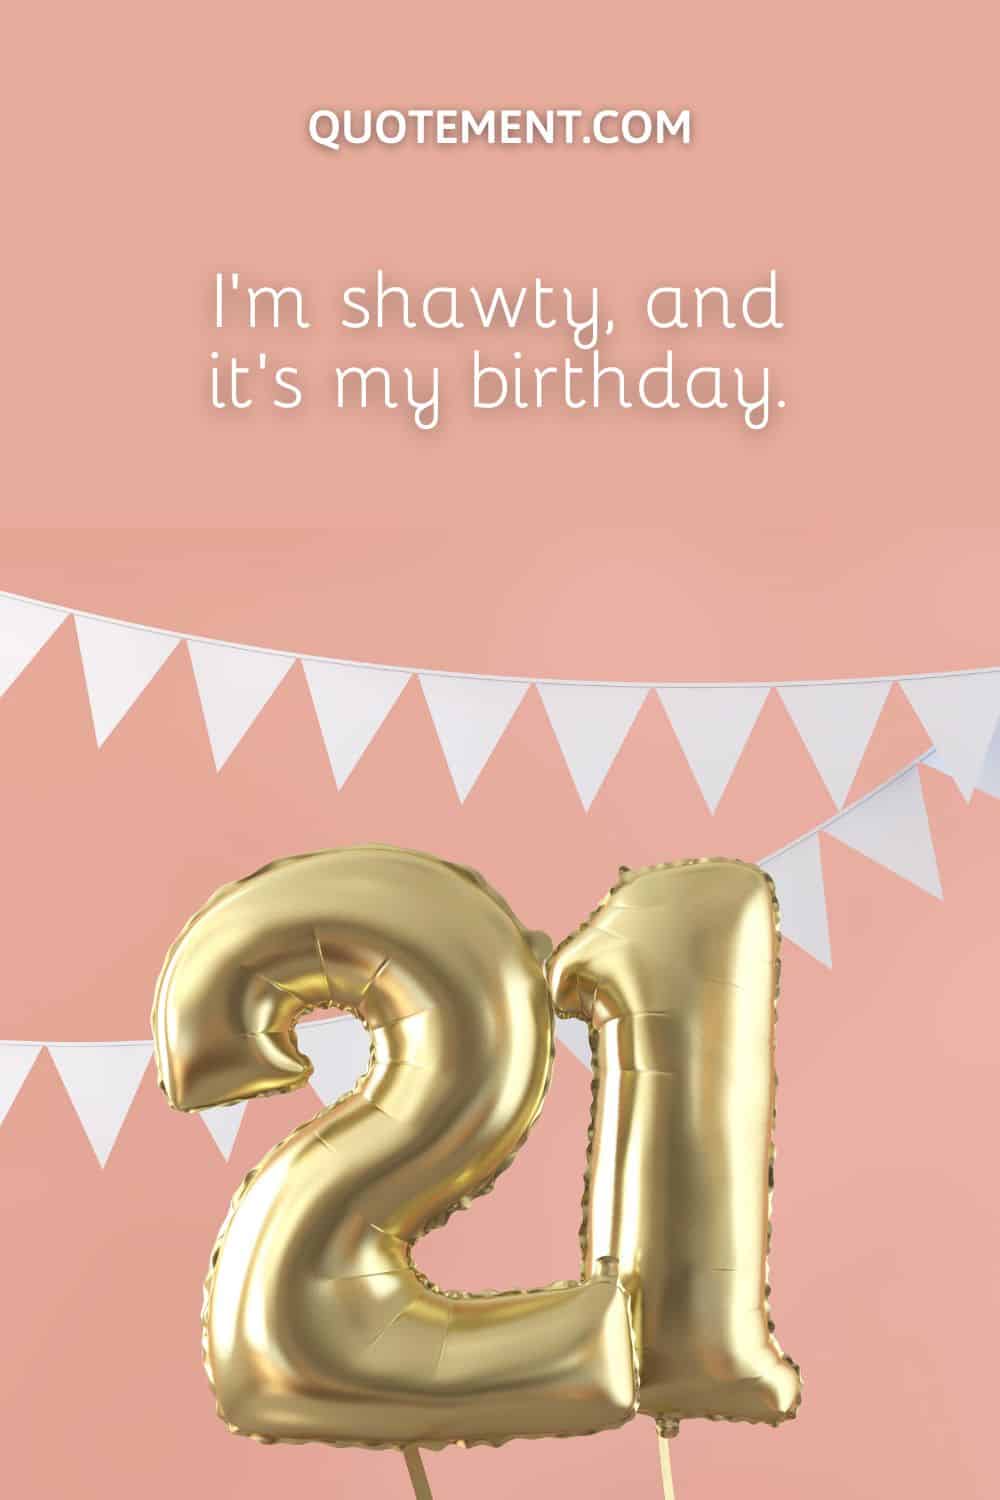 I’m shawty, and it’s my birthday